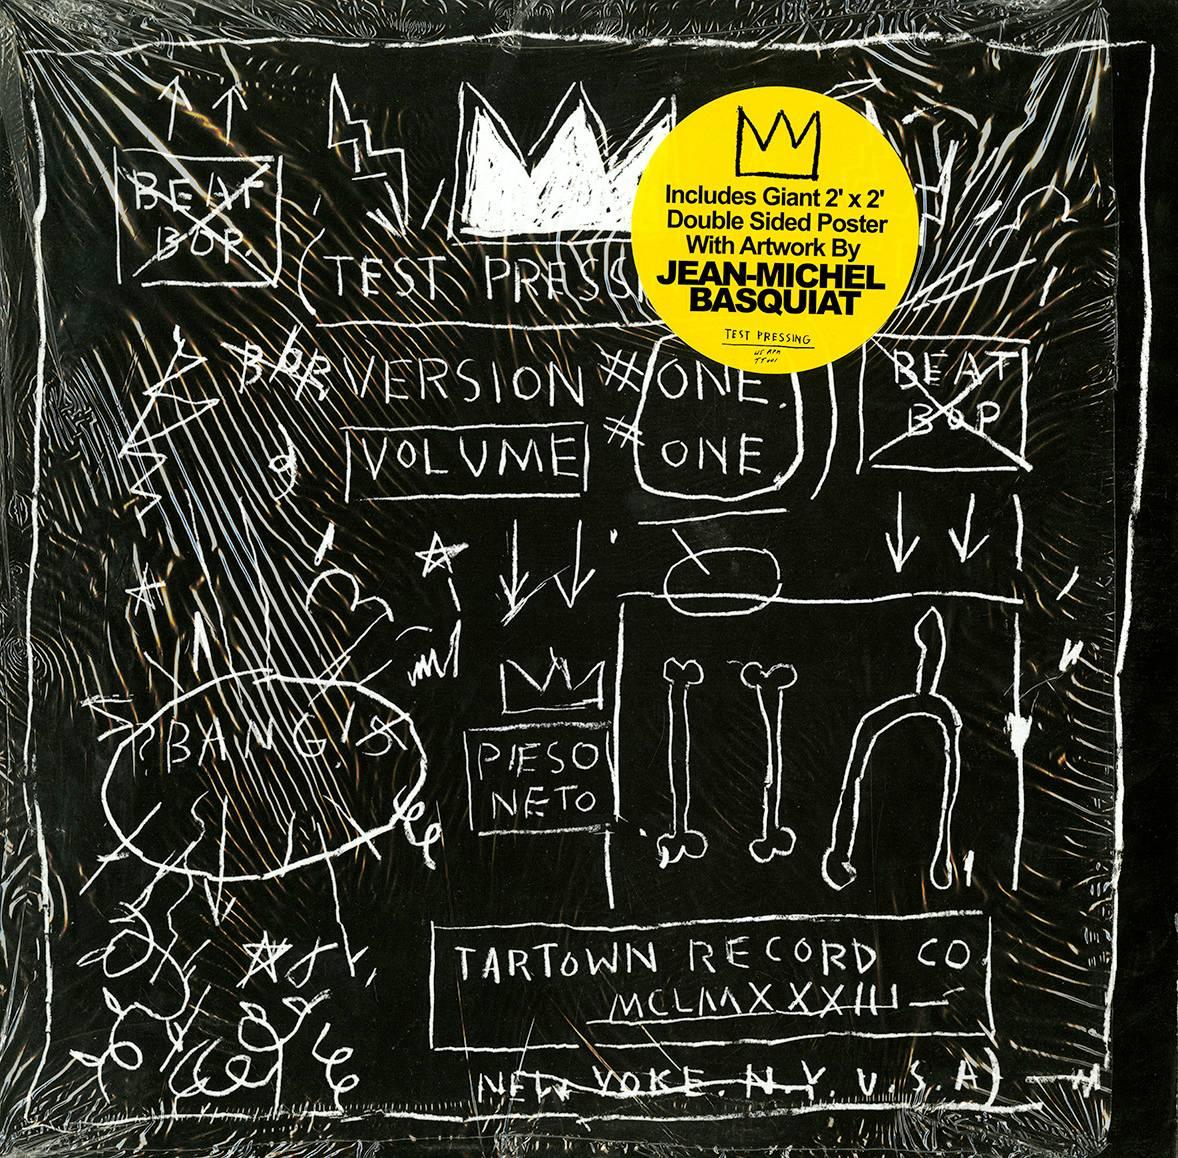 Basquiat Beat Bop record art and poster (Basquiat album art)  - Mixed Media Art by after Jean-Michel Basquiat